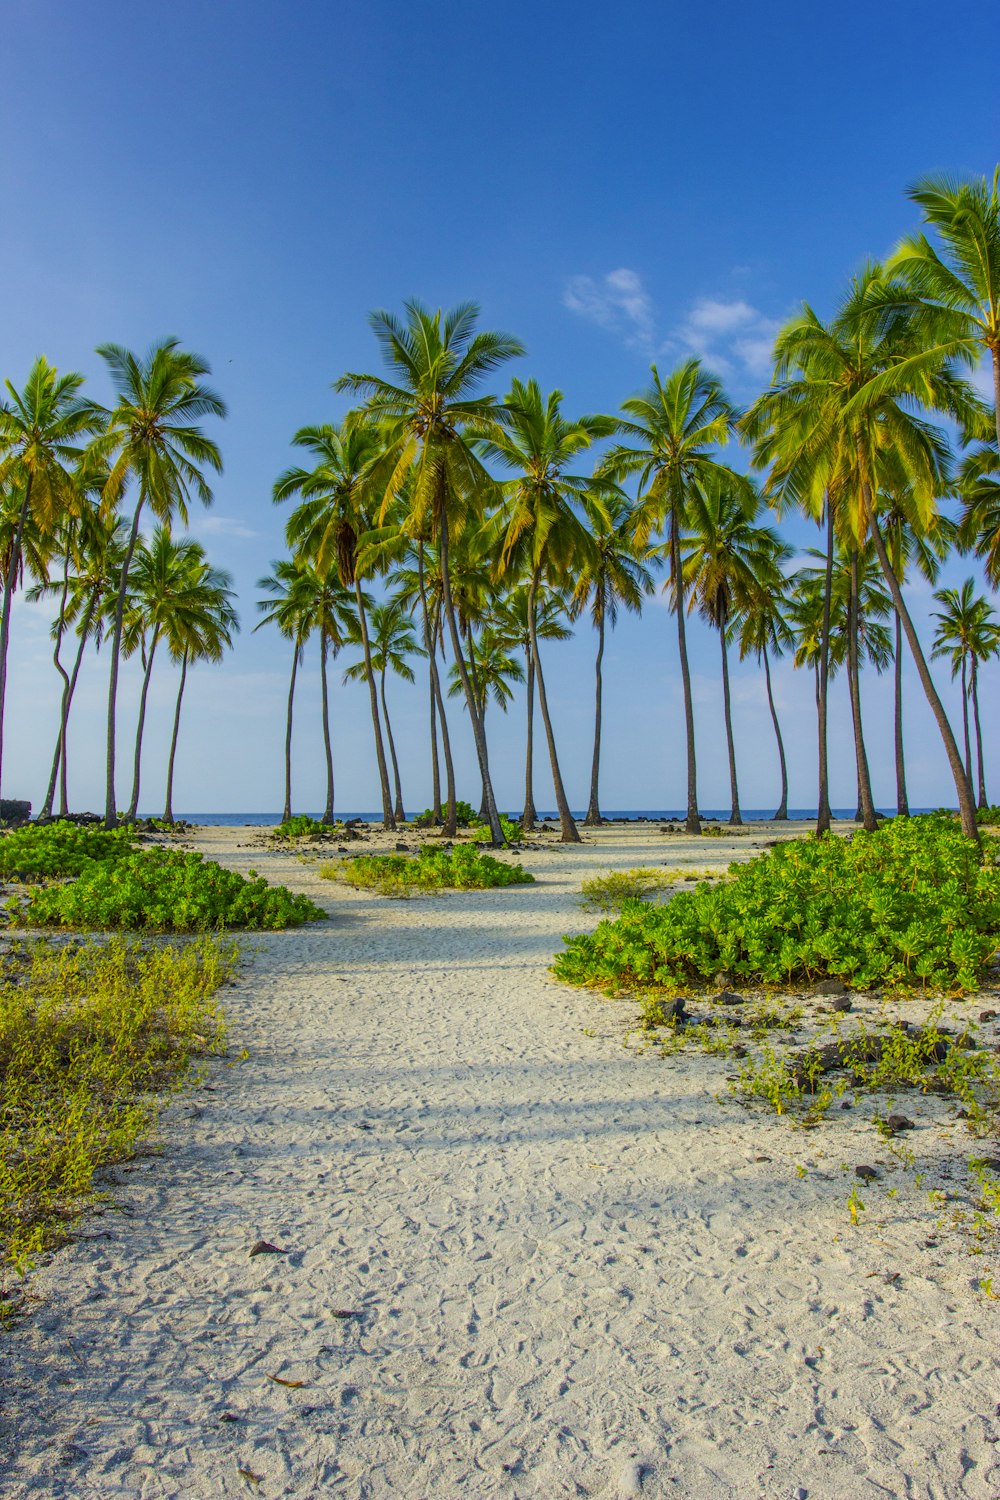 a sandy beach with palm trees